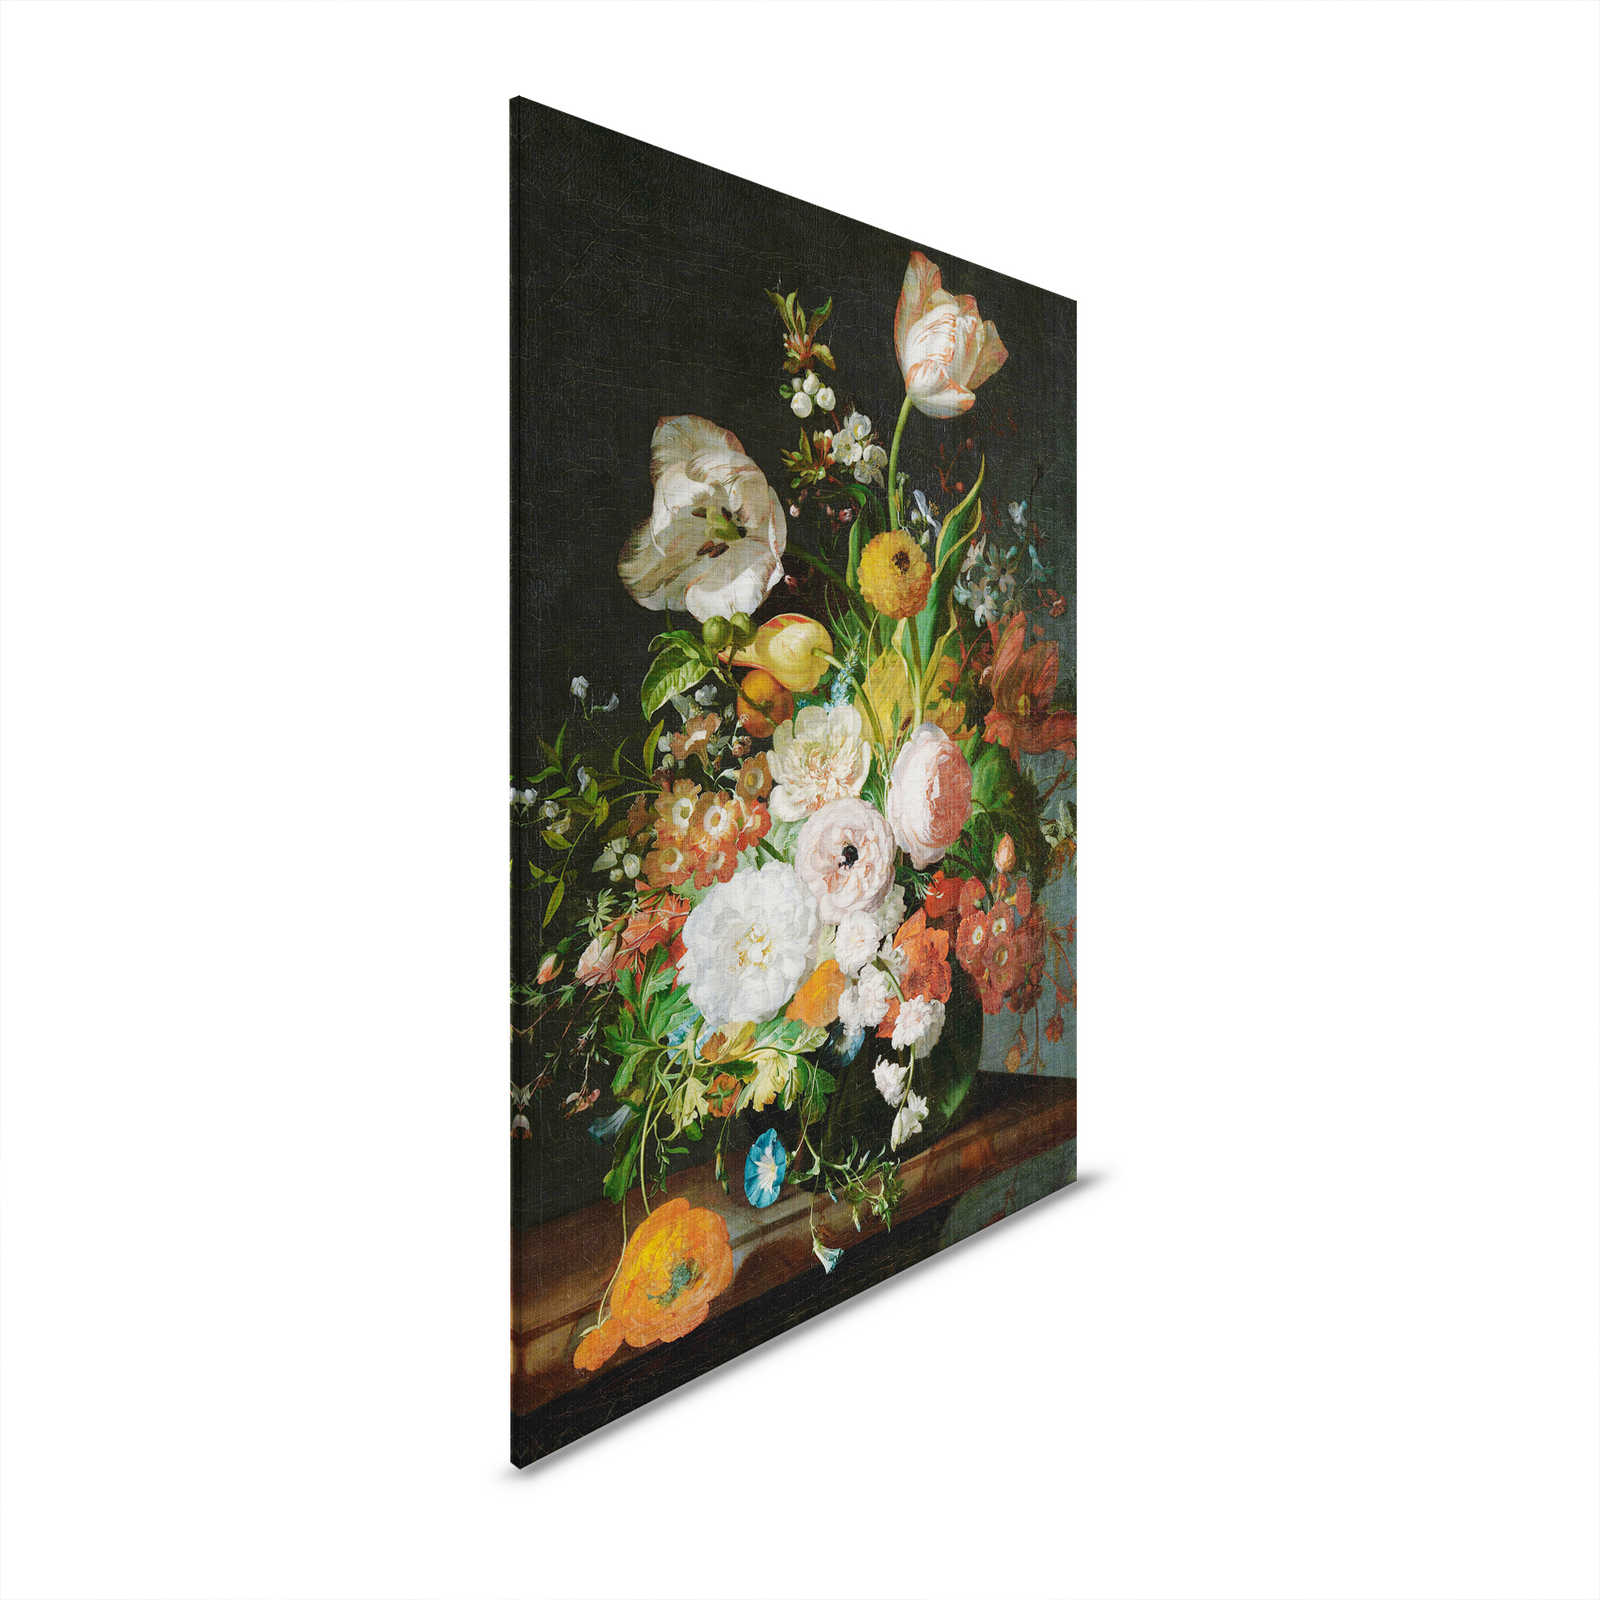 Artists Studio 2 - Leinwandbild Blumen Strauß Gemälde Kunststil – 0,80 m x 1,20 m
